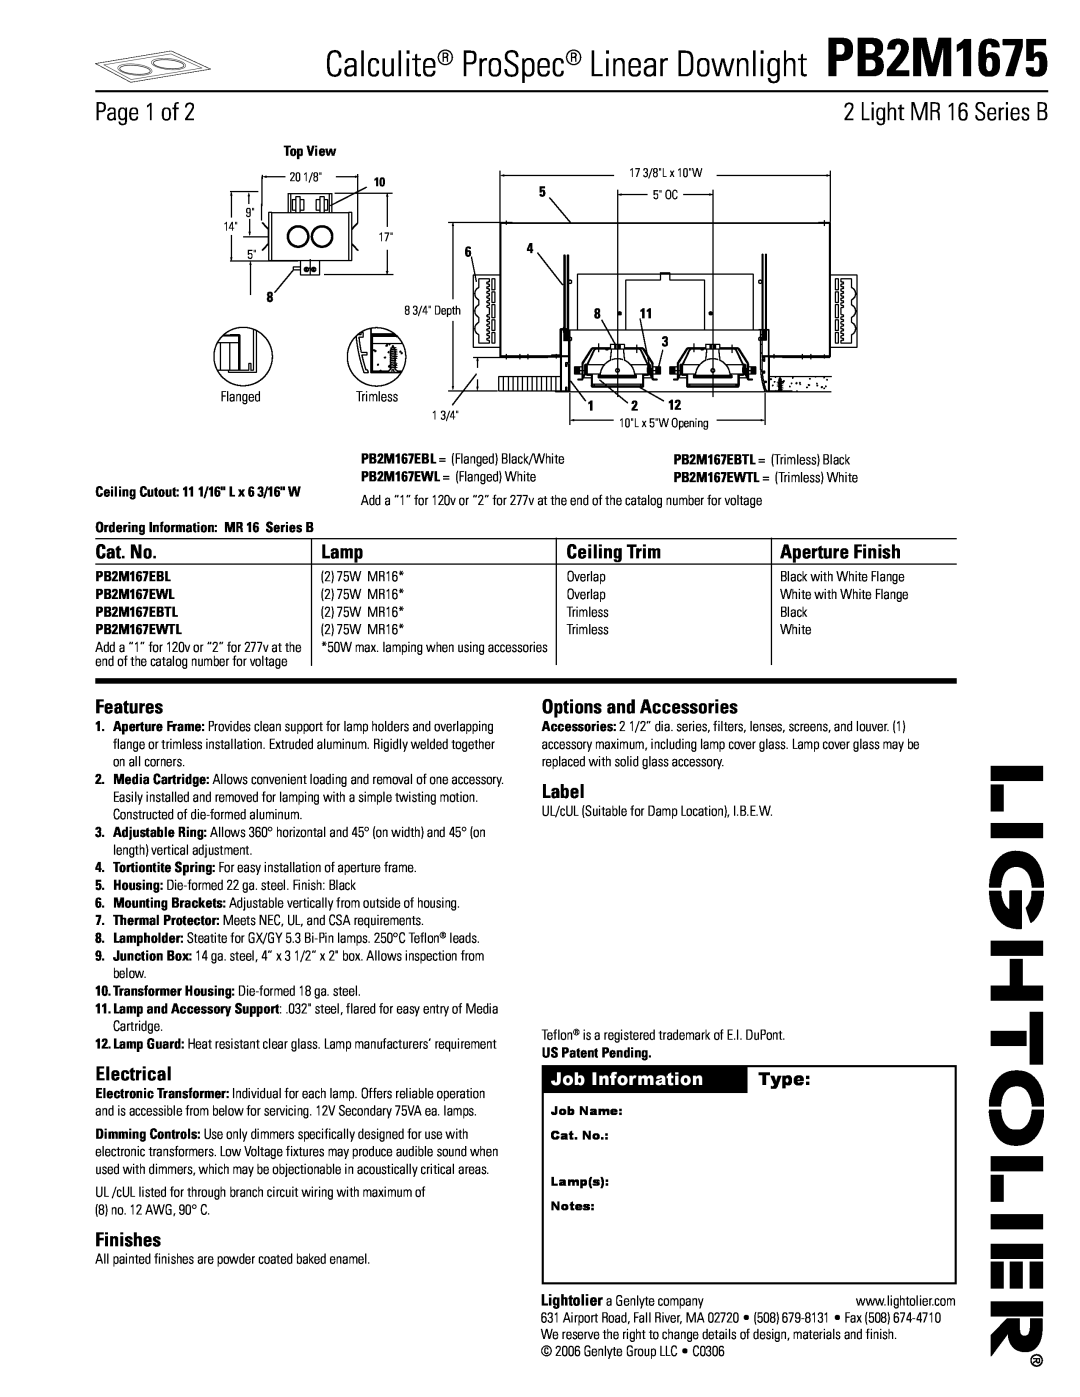 Lightolier manual Calculite ProSpec Linear Downlight PB2M1675, Page 1 of, Cat. No, Lamp, Ceiling Trim, Aperture Finish 